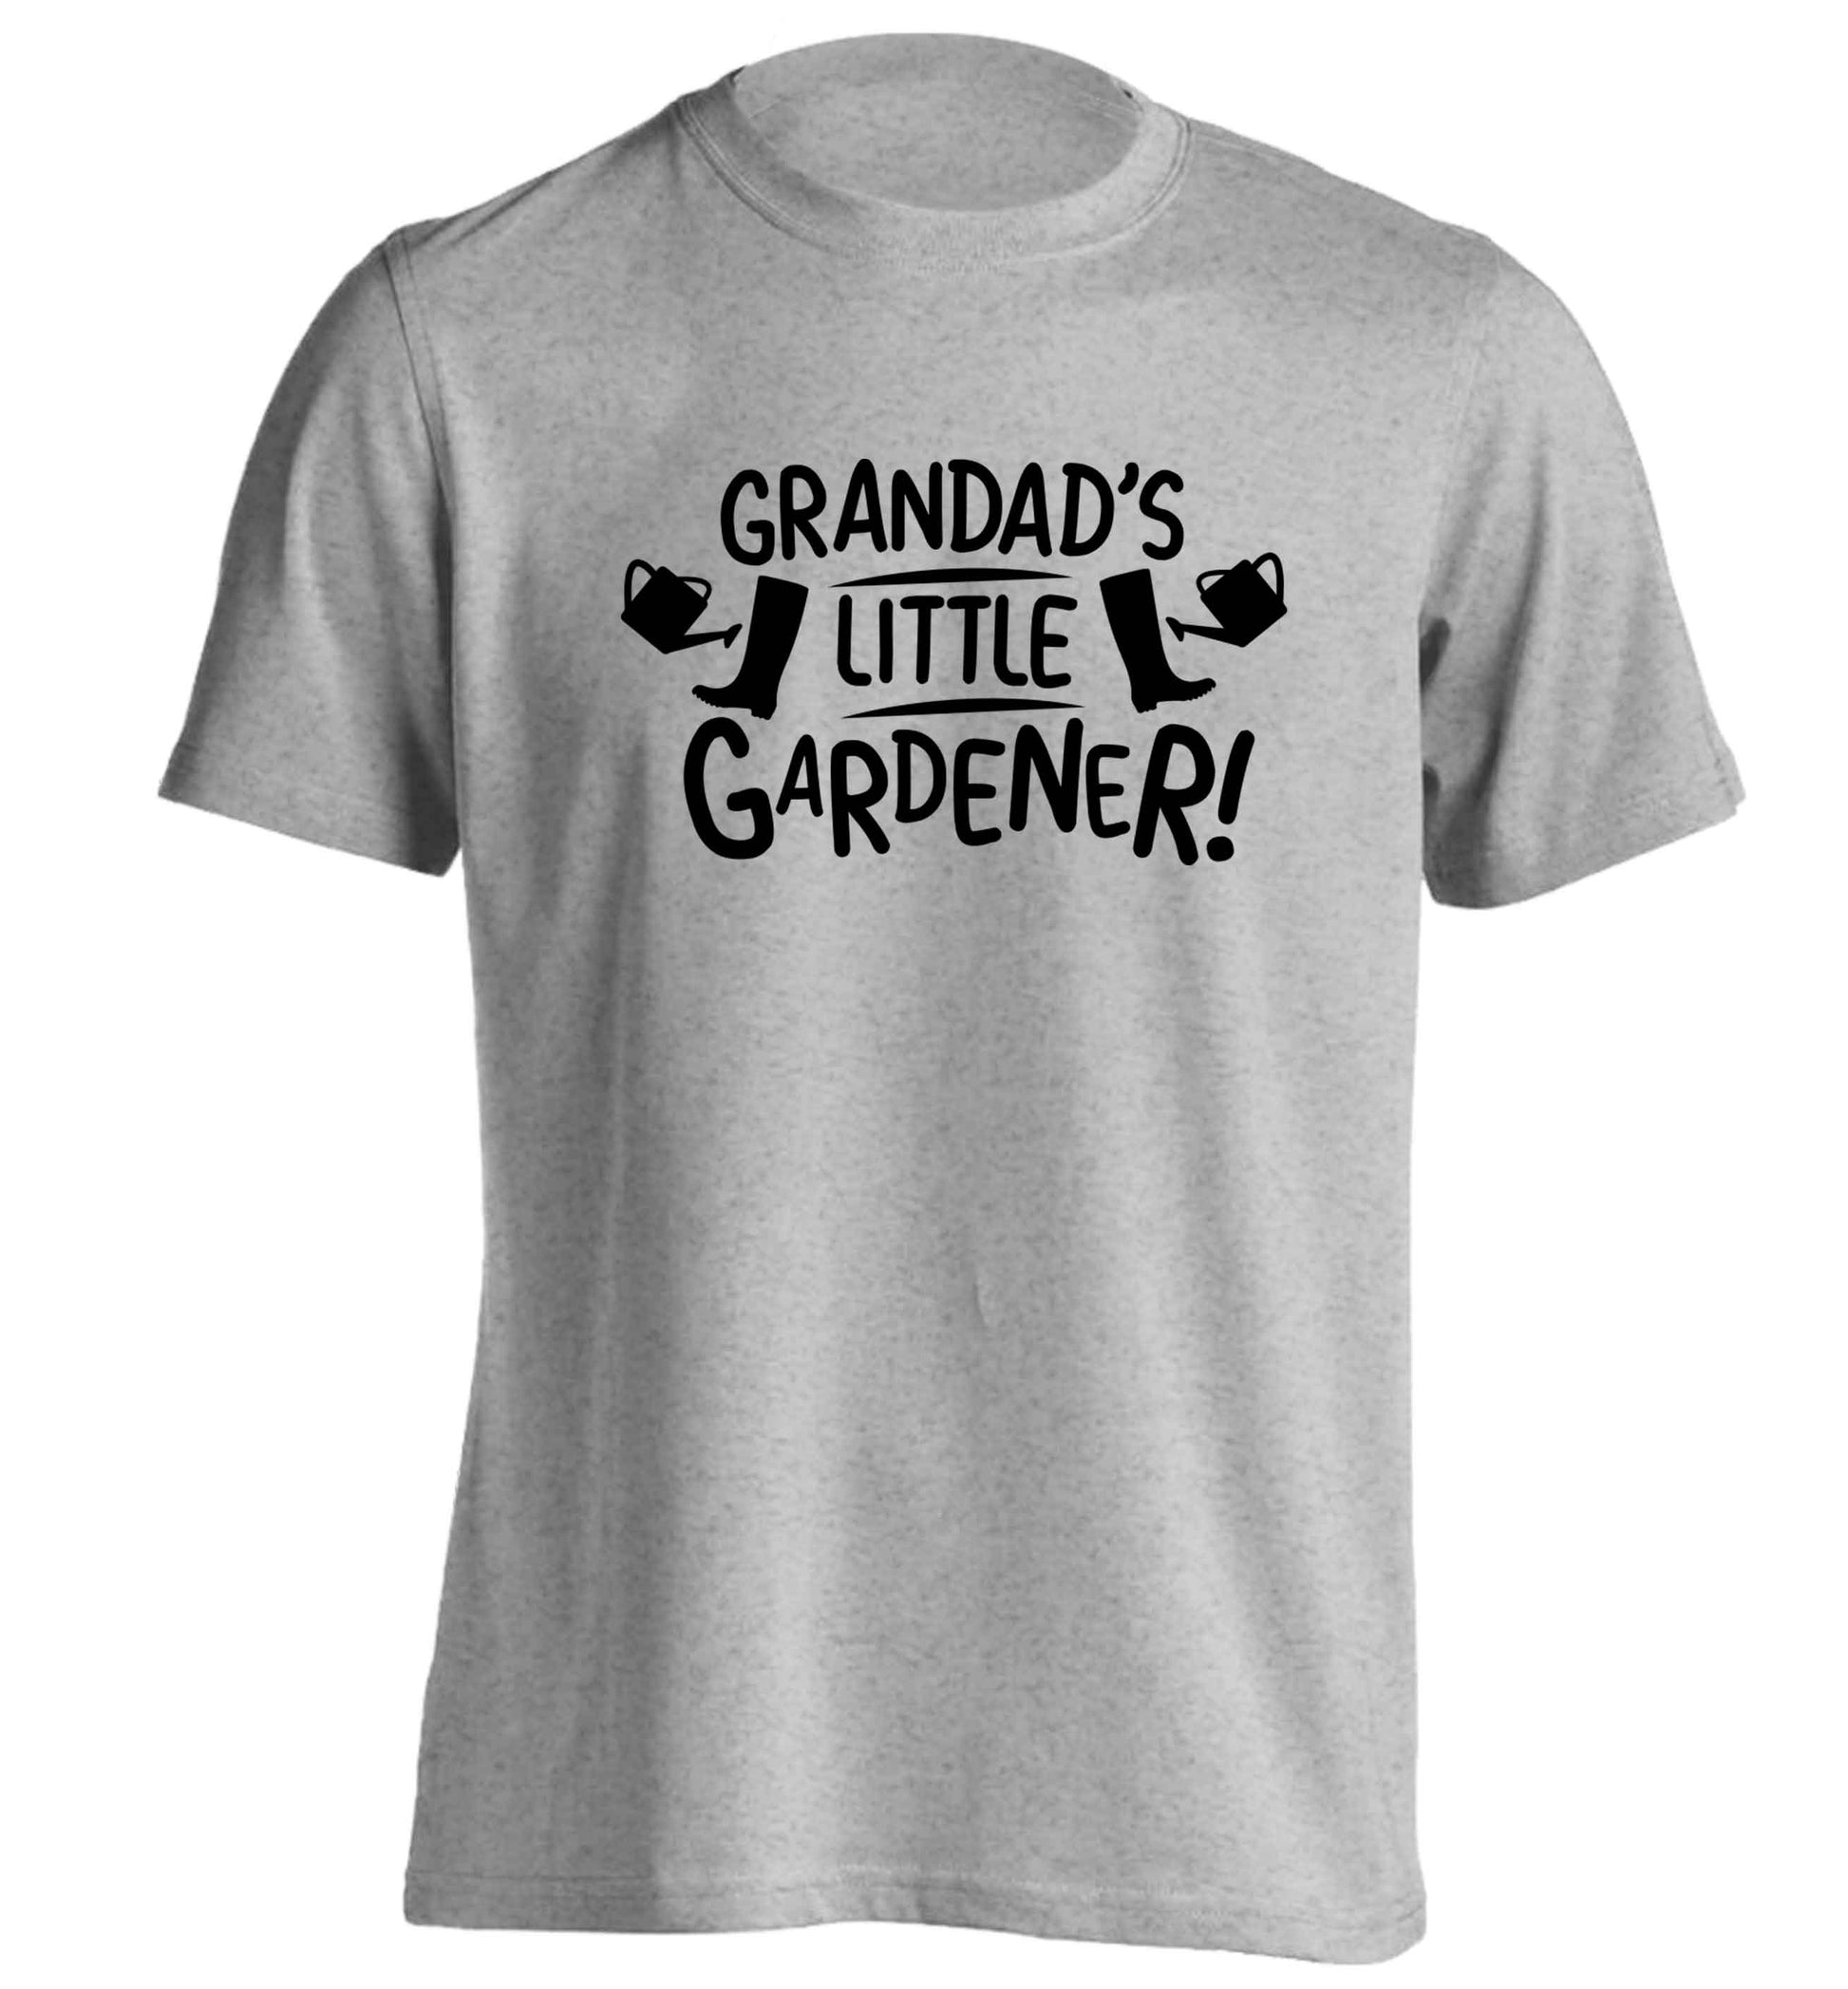 Grandad's little gardener adults unisex grey Tshirt 2XL